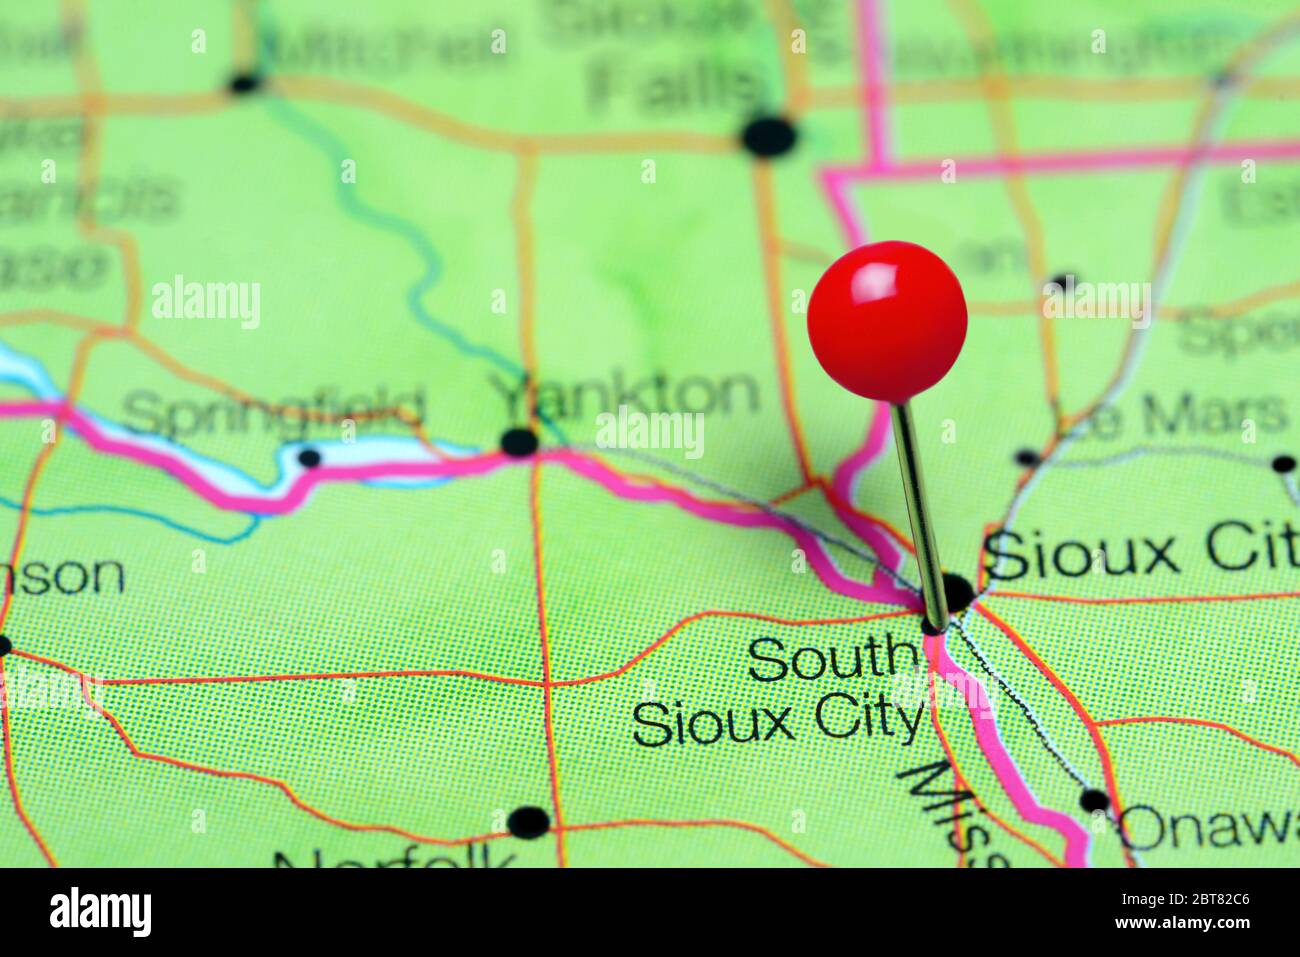 South Sioux City pinned on a map of Nebraska, USA Stock Photo